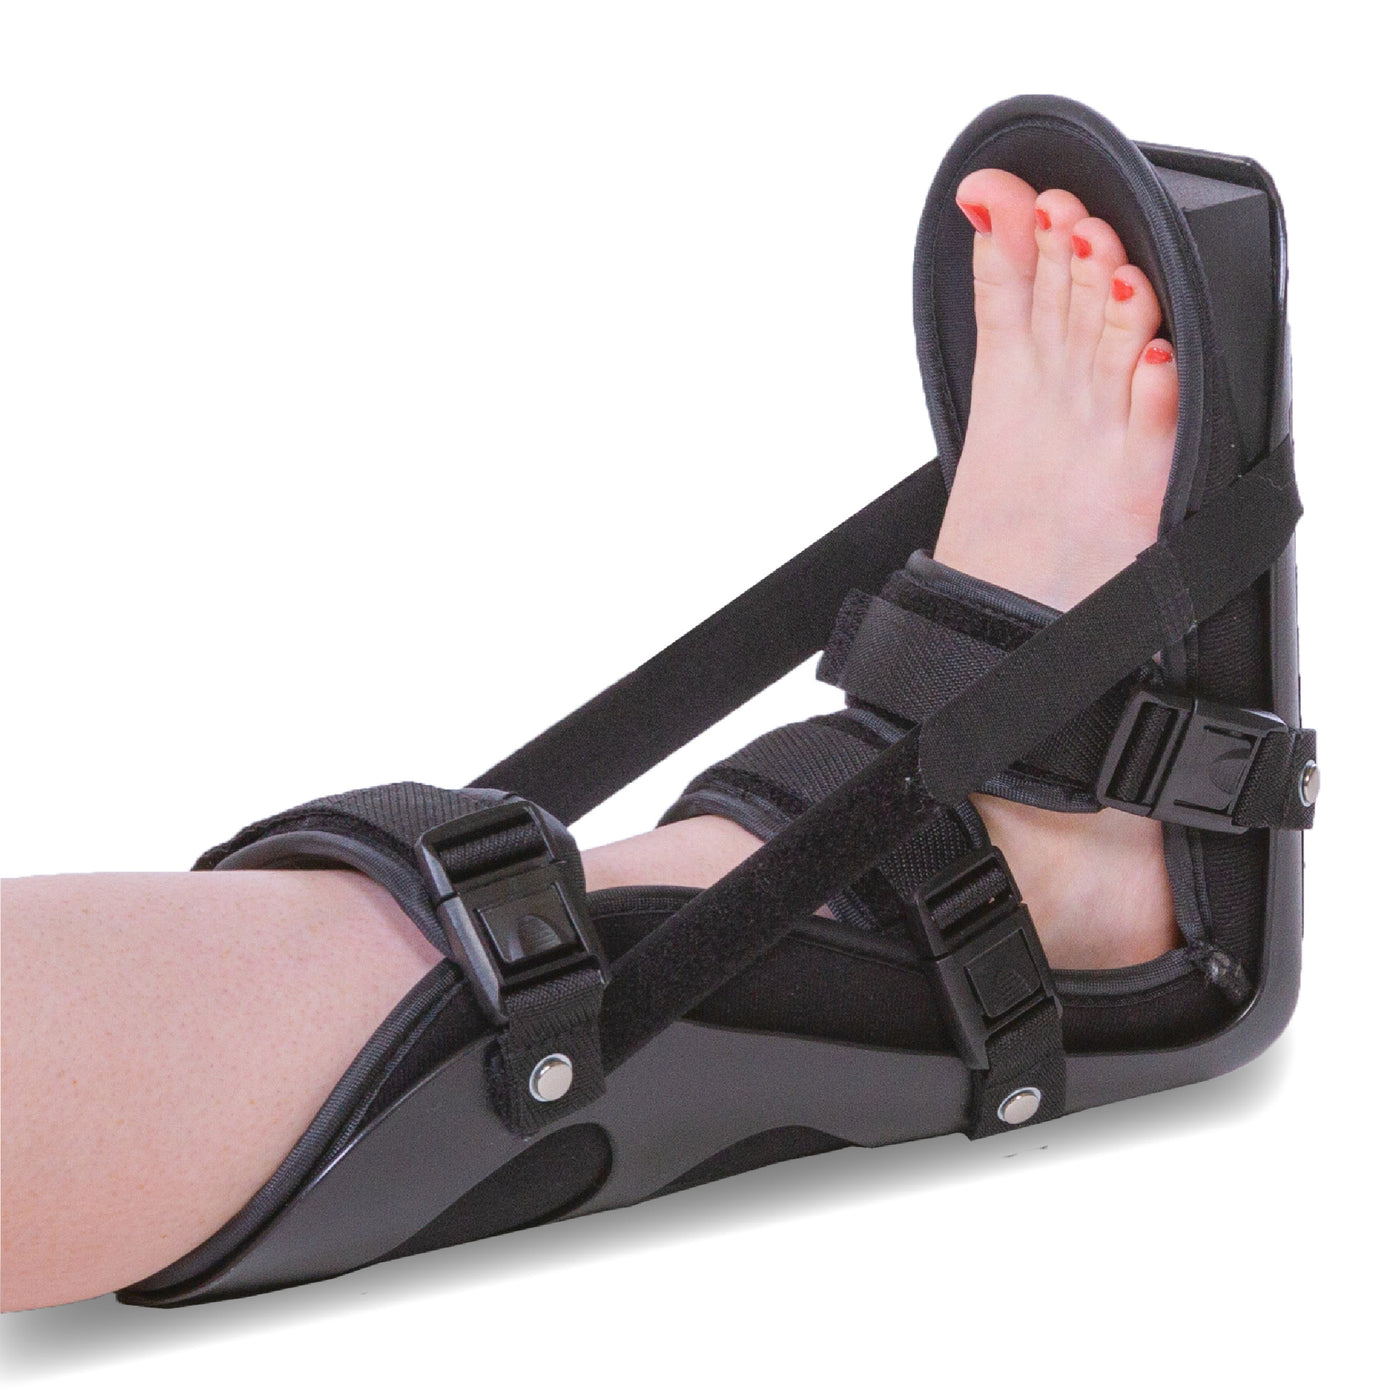 BraceAbility Plantar Fasciitis Night Sock  Soft Stretching Boot Splint for  Sleeping, Achilles Tendonitis Foot Support Brace(Large) 